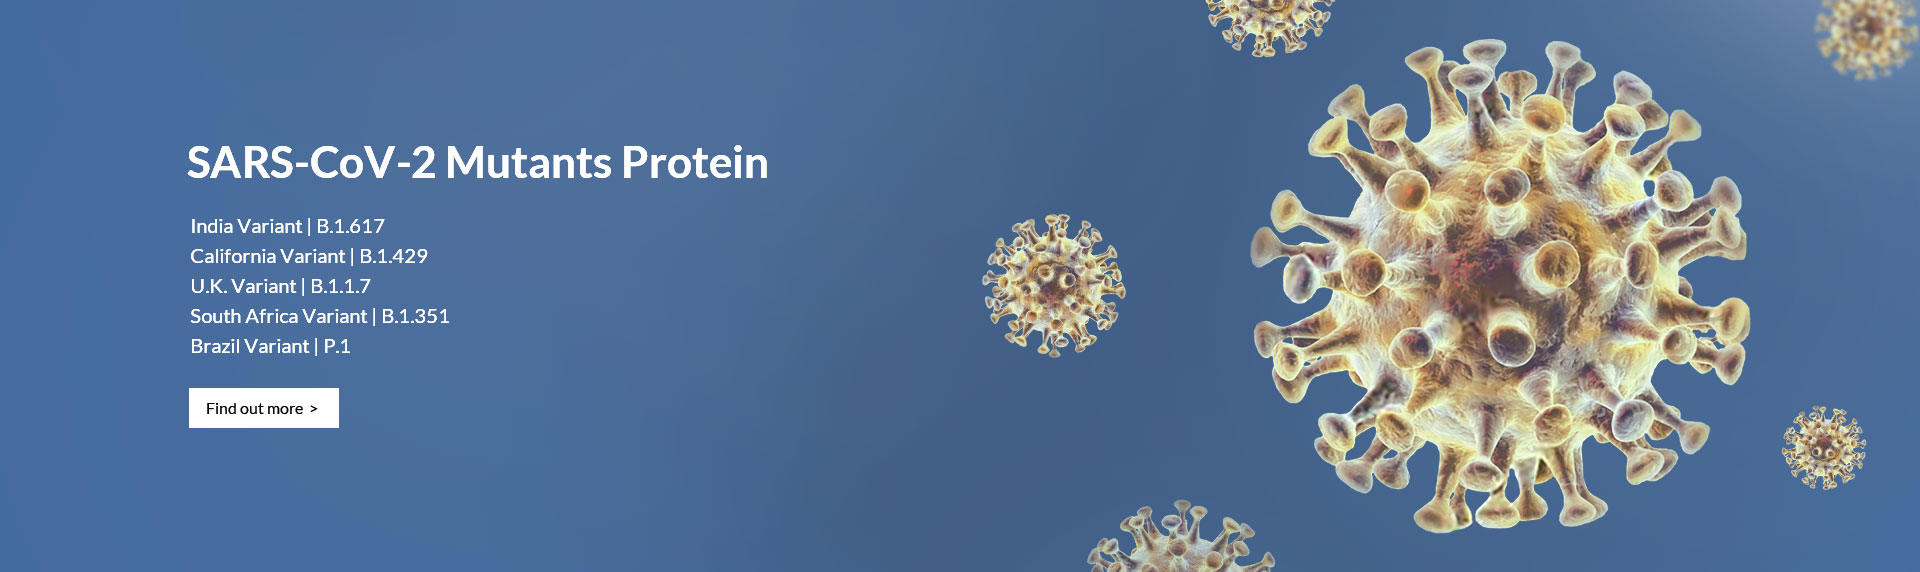 SARS-CoV-2 Mutants Protein